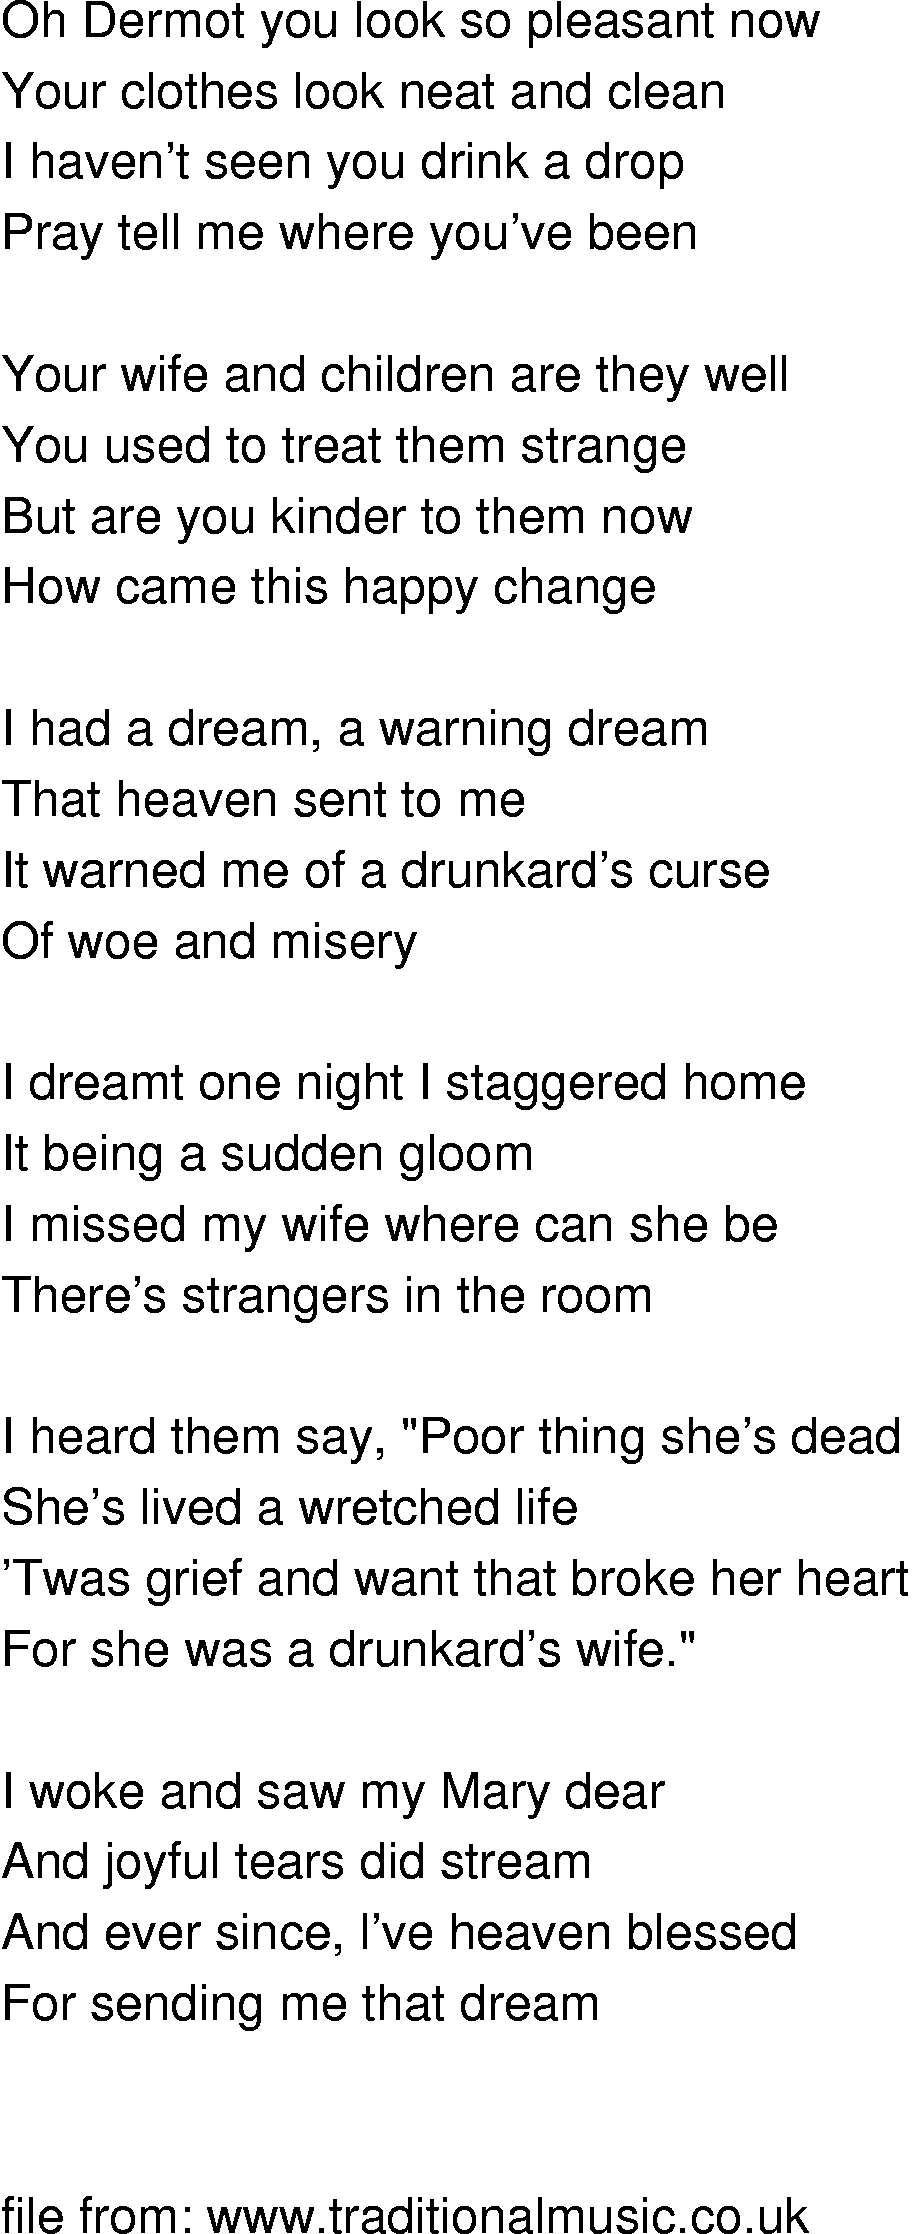 Old-Time (oldtimey) Song Lyrics - drunkards dream